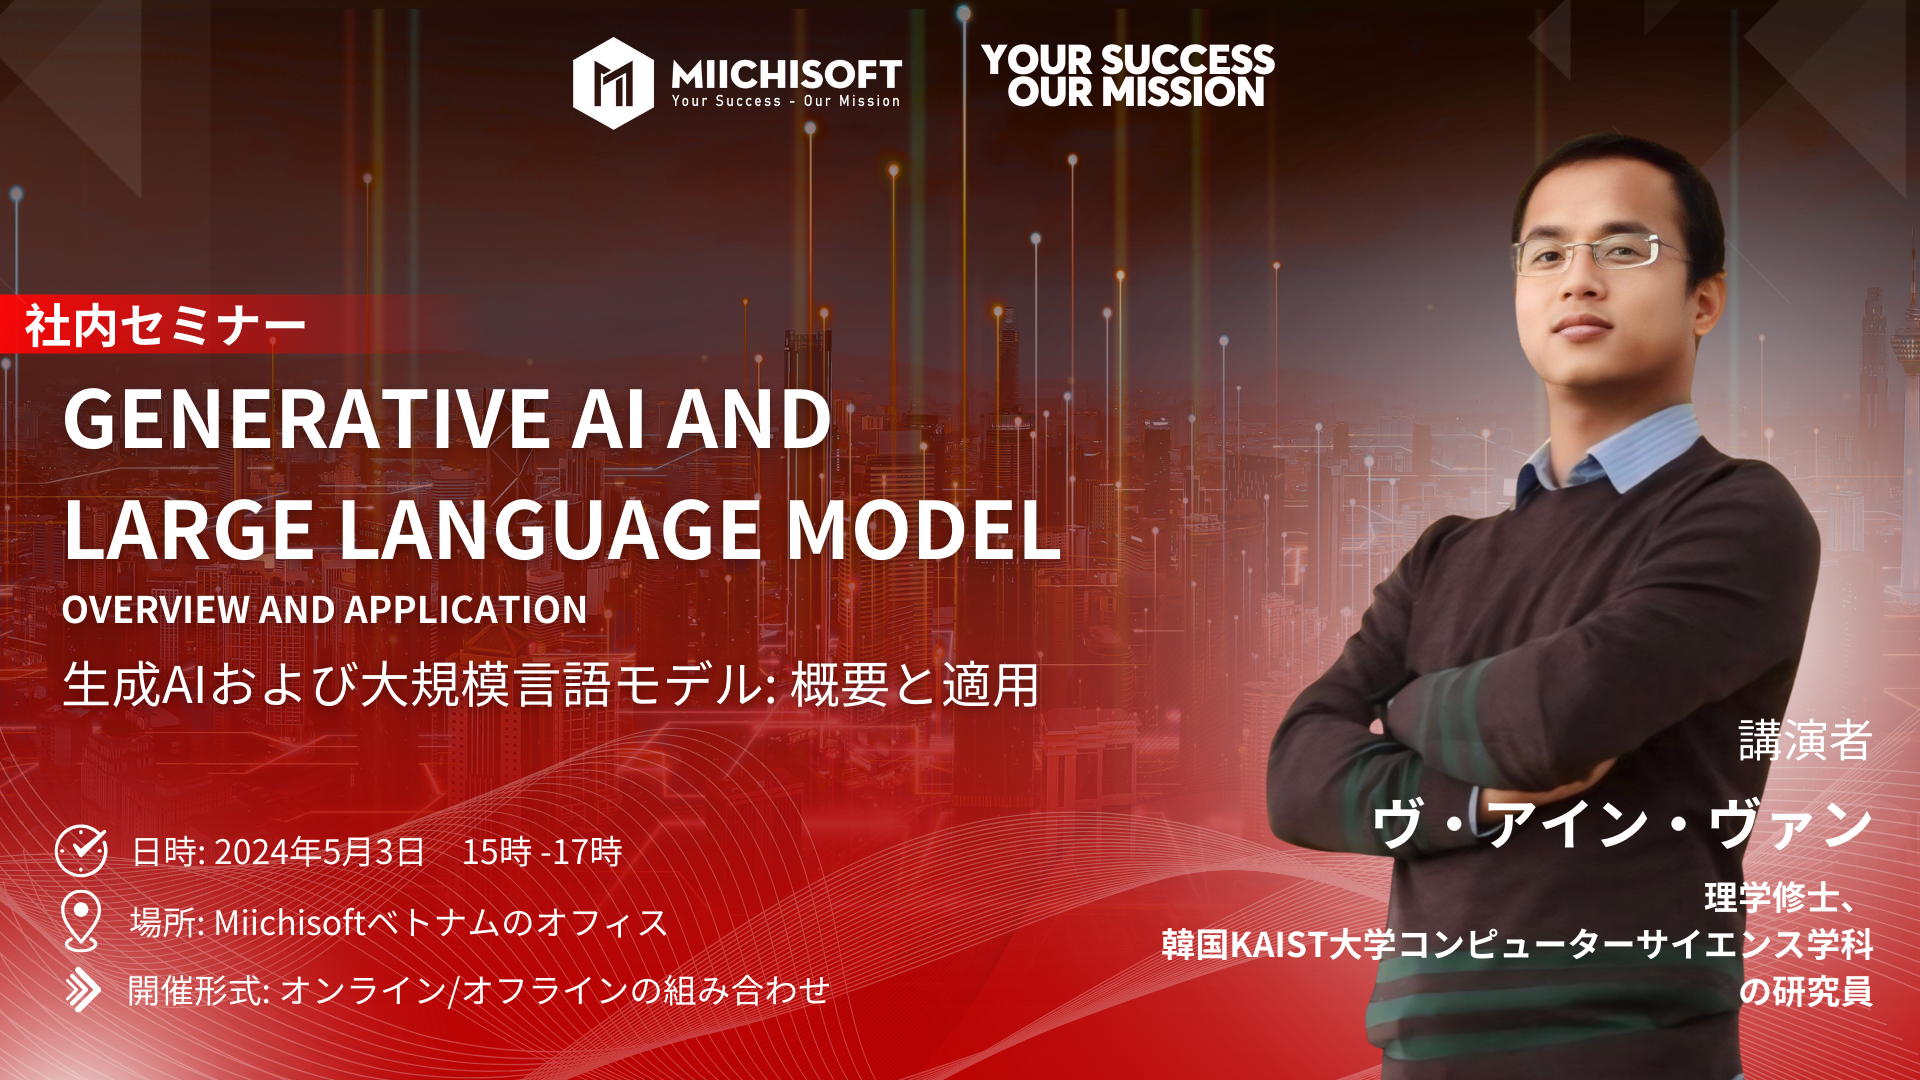 Miichisoftベトナム、生成AIと大規模言語モデルの社内セミナーを開催